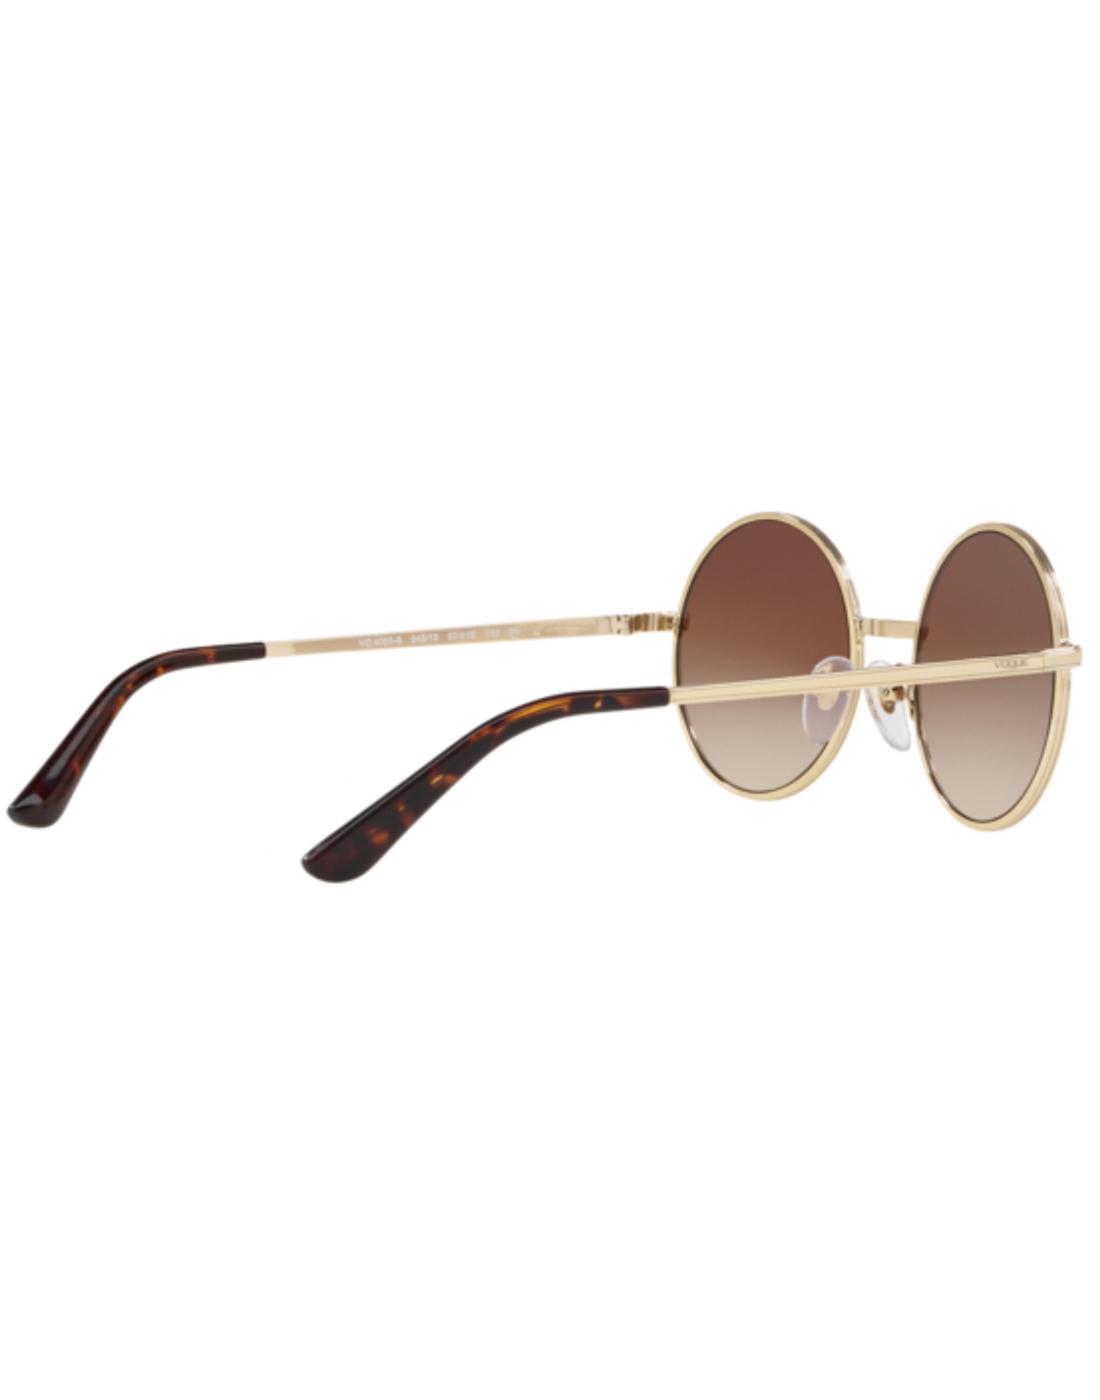 VOGUE Gigi Hadid Retro 60s Vintage Sunglasses in Pale Gold